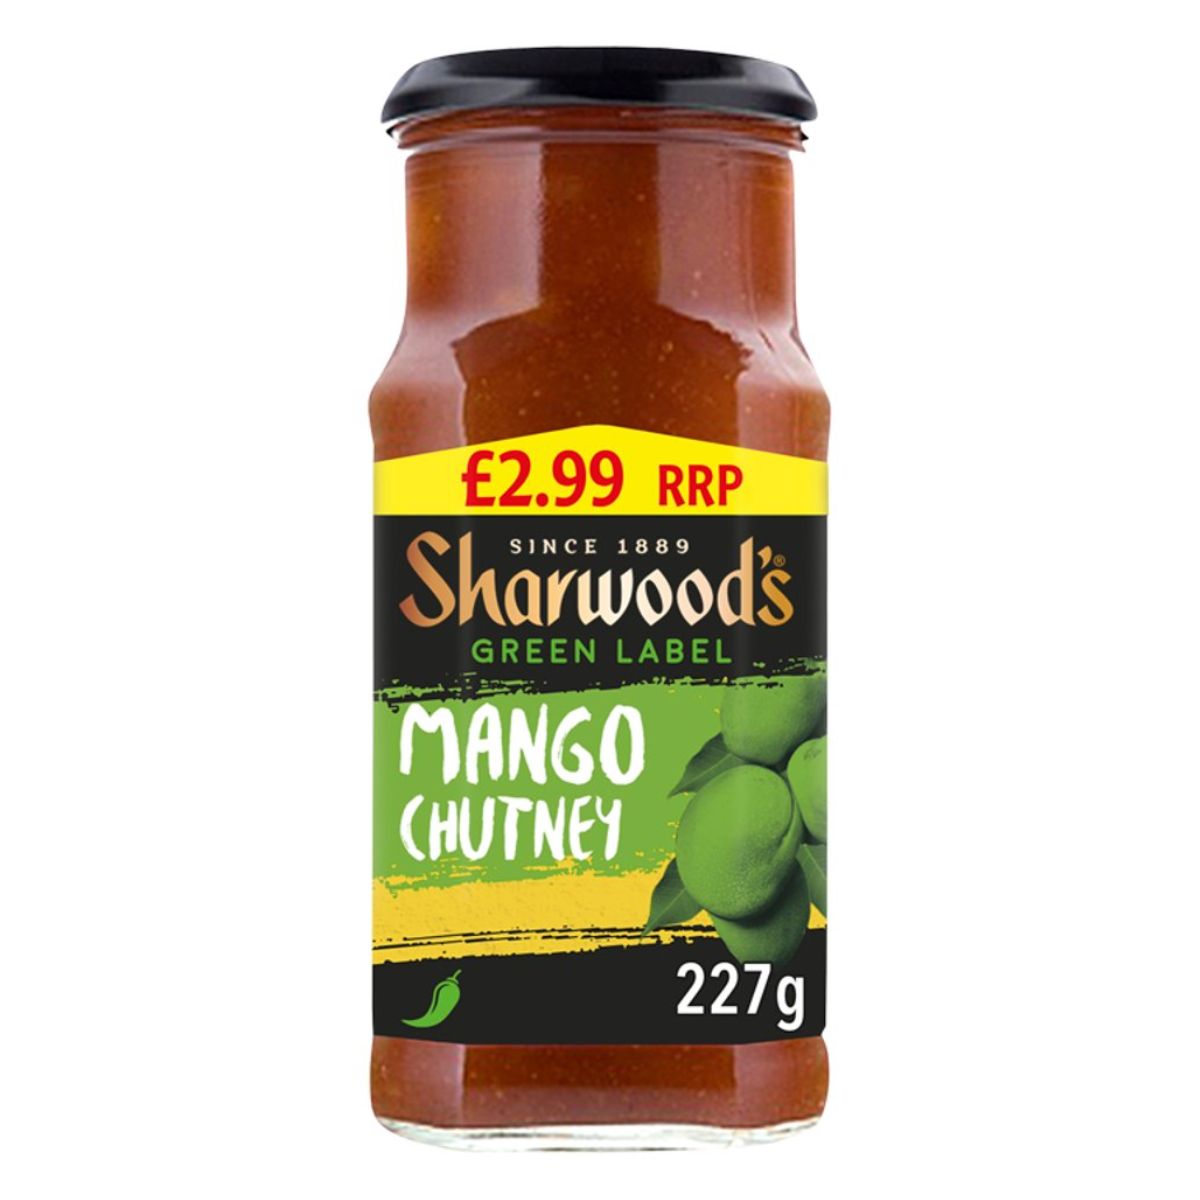 A jar of Sharwoods - Mango Chutney - 227g, priced at £2.99 rrp.